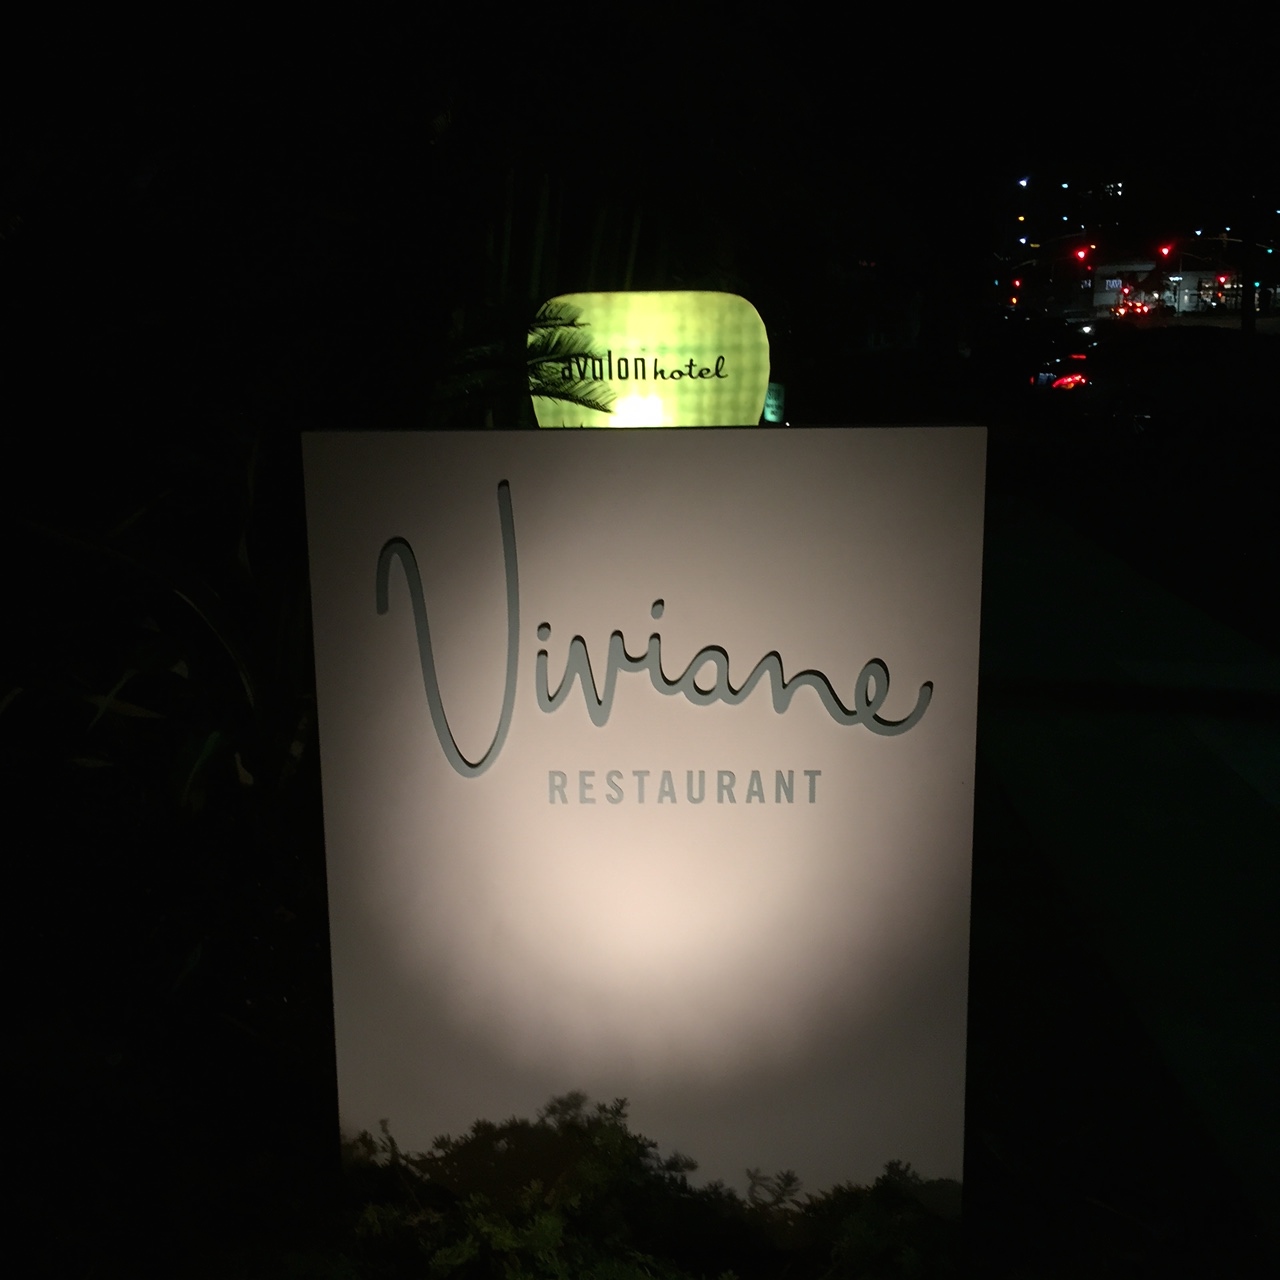 Viviane Restaurant at the Avalon Hotel